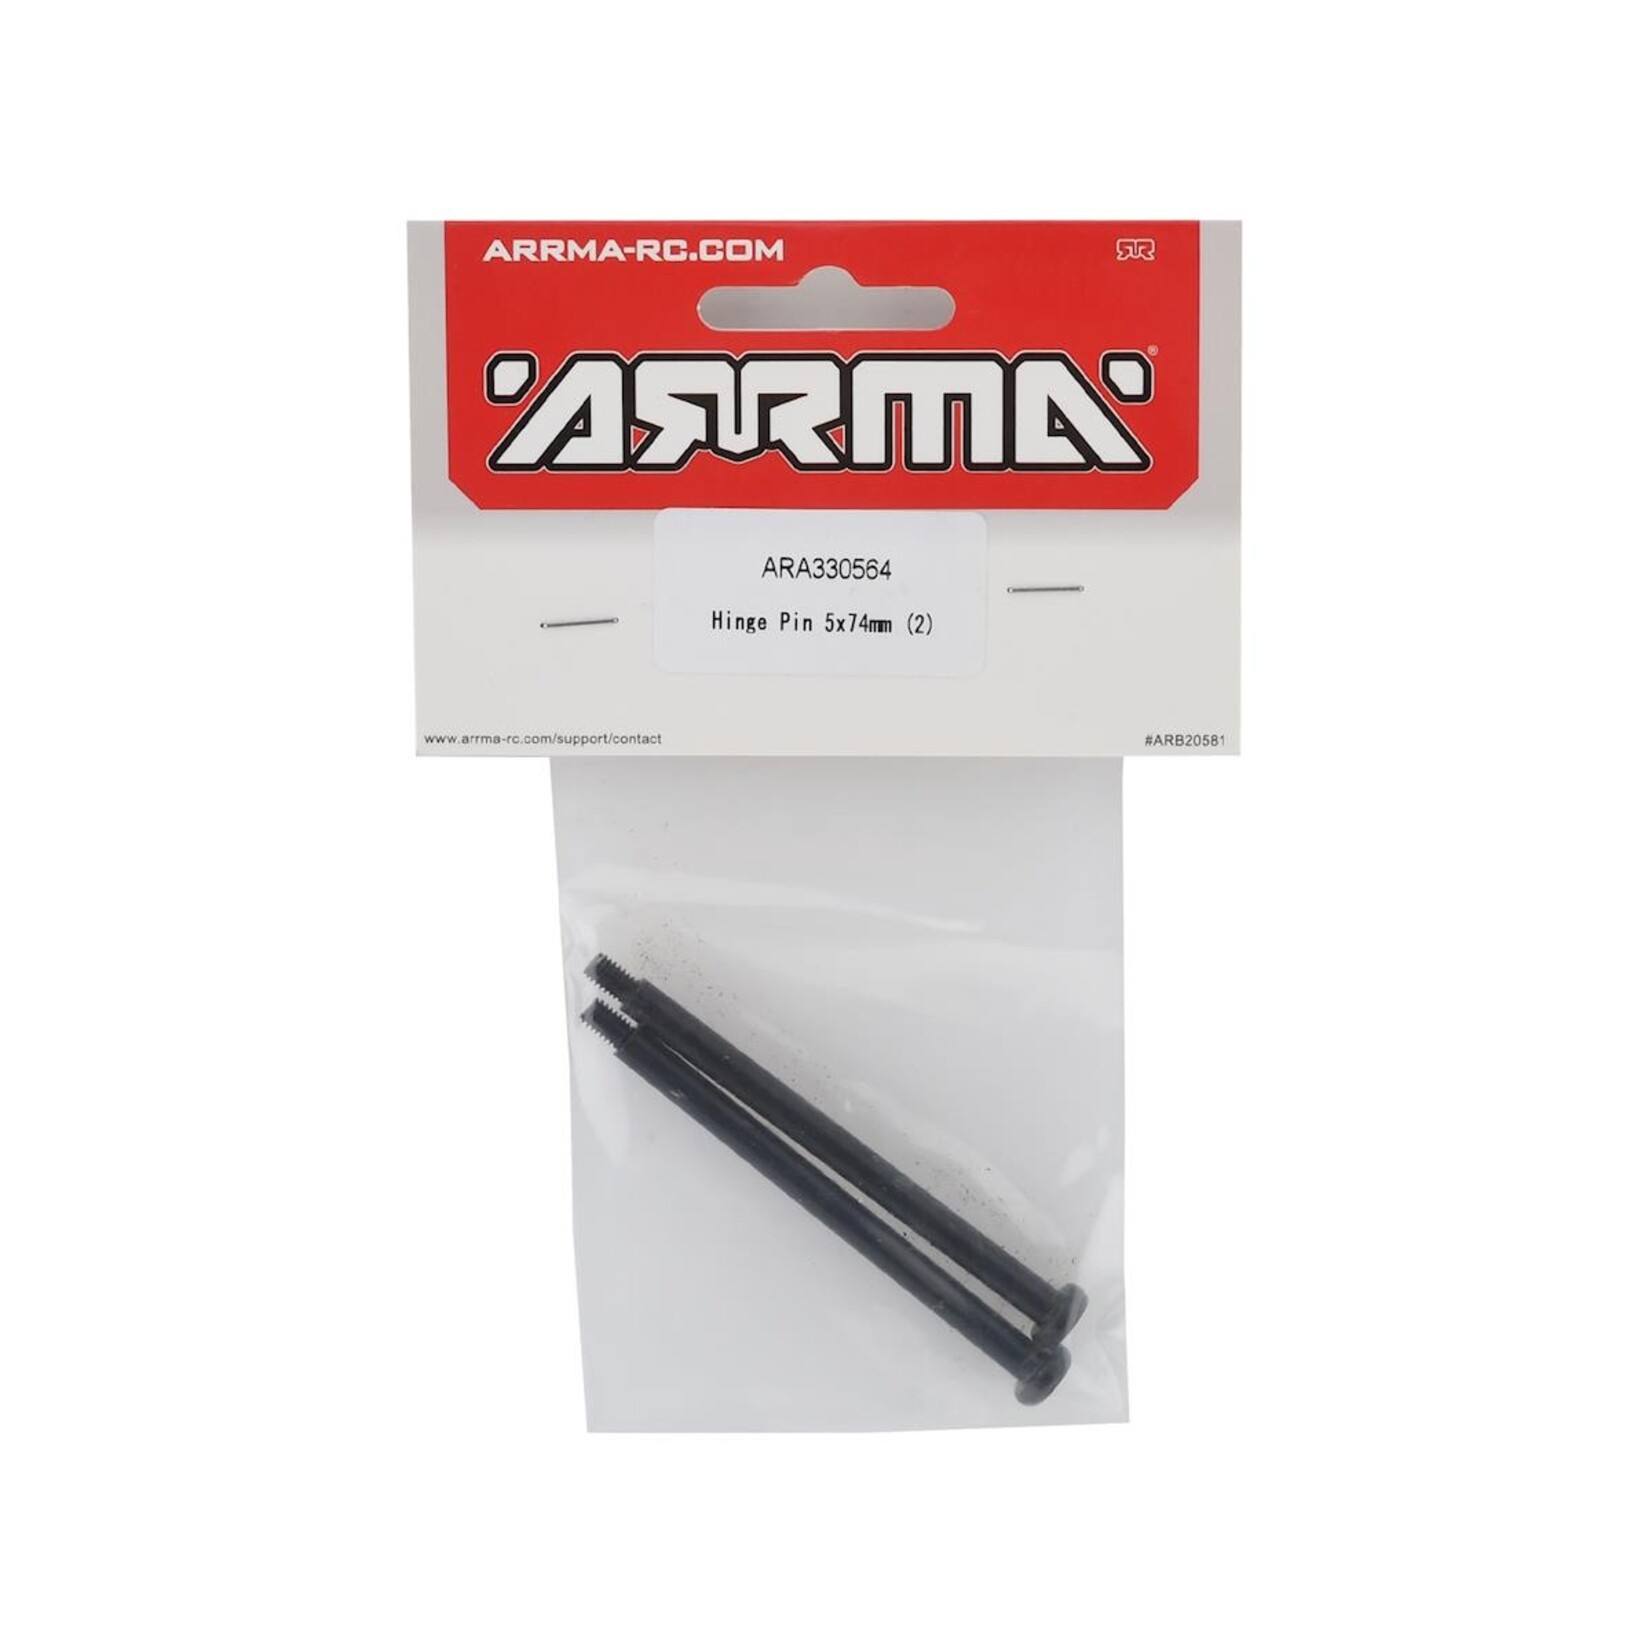 ARRMA Arrma 8S BLX 5x74mm Hinge Pin (2) #ARA330564